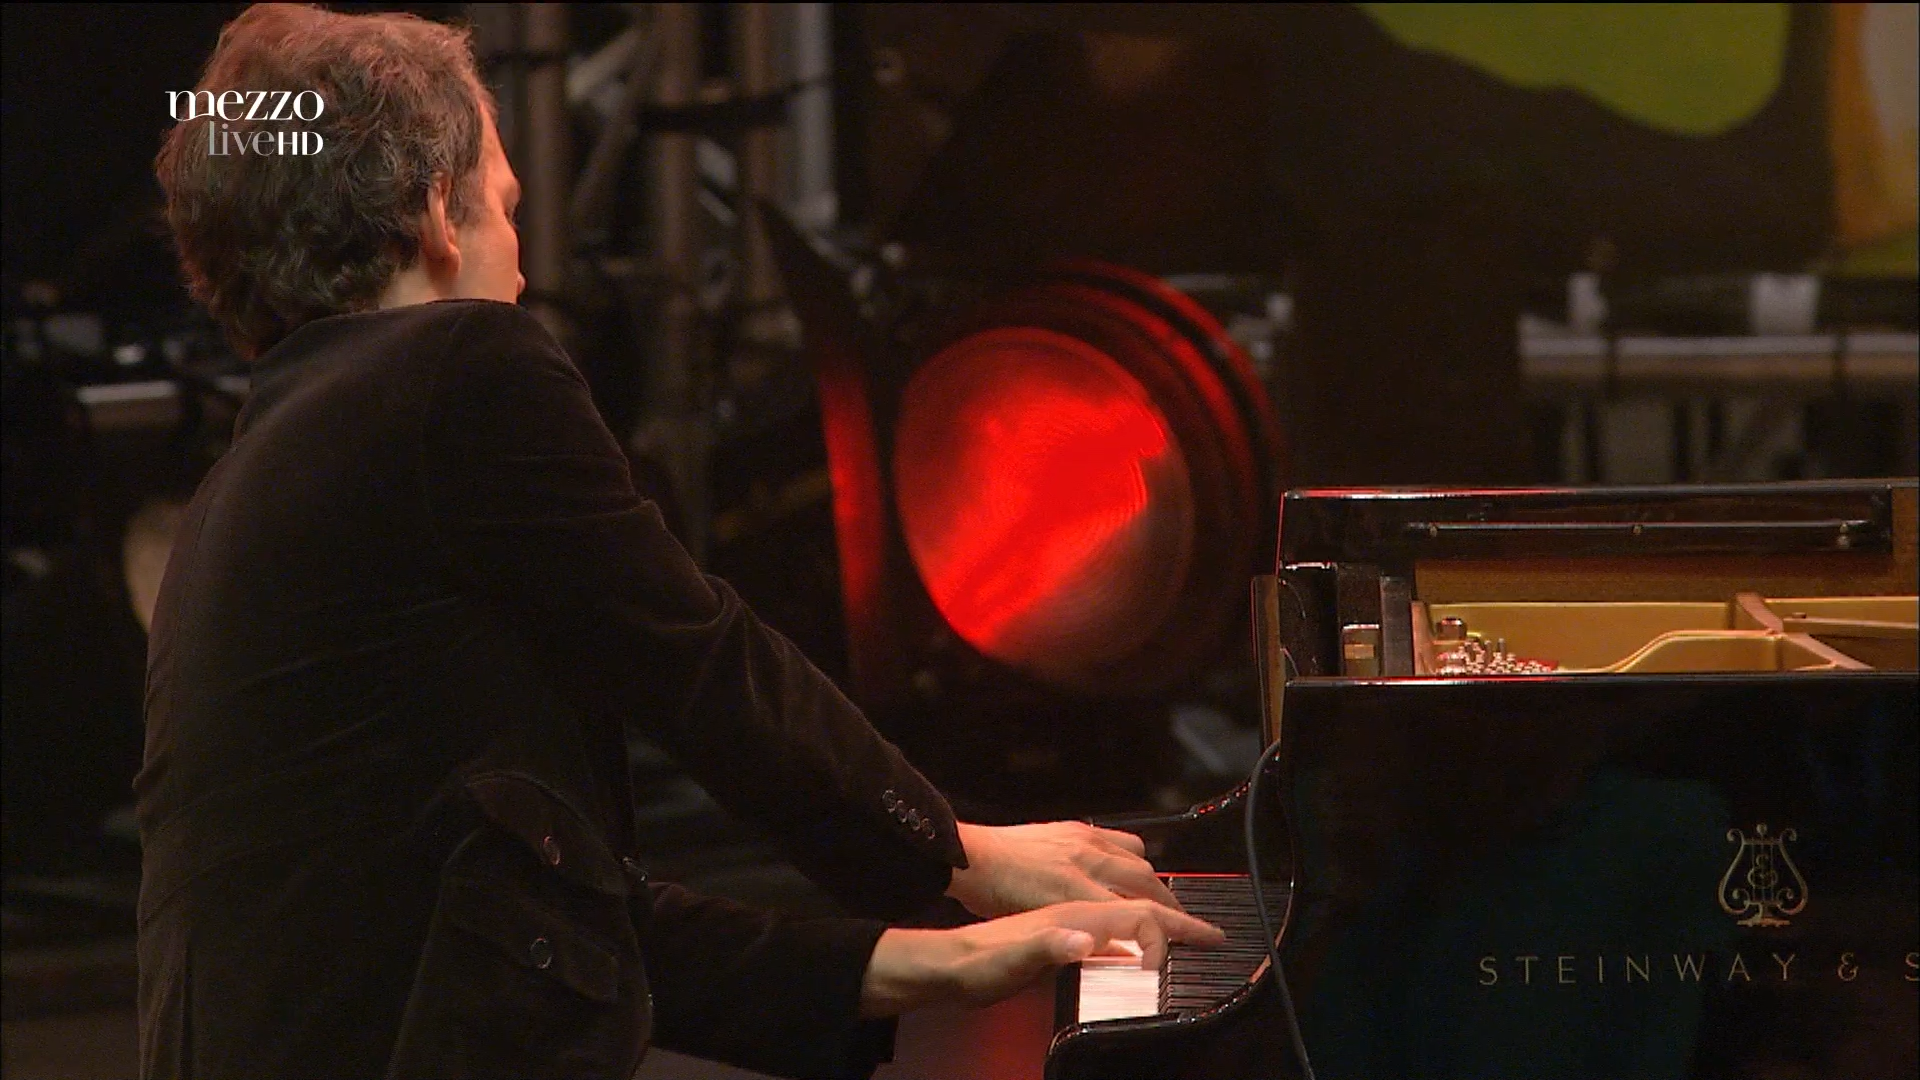 2010 Brad Mehldau - Jazz a Vienne [HDTV 1080i] 1